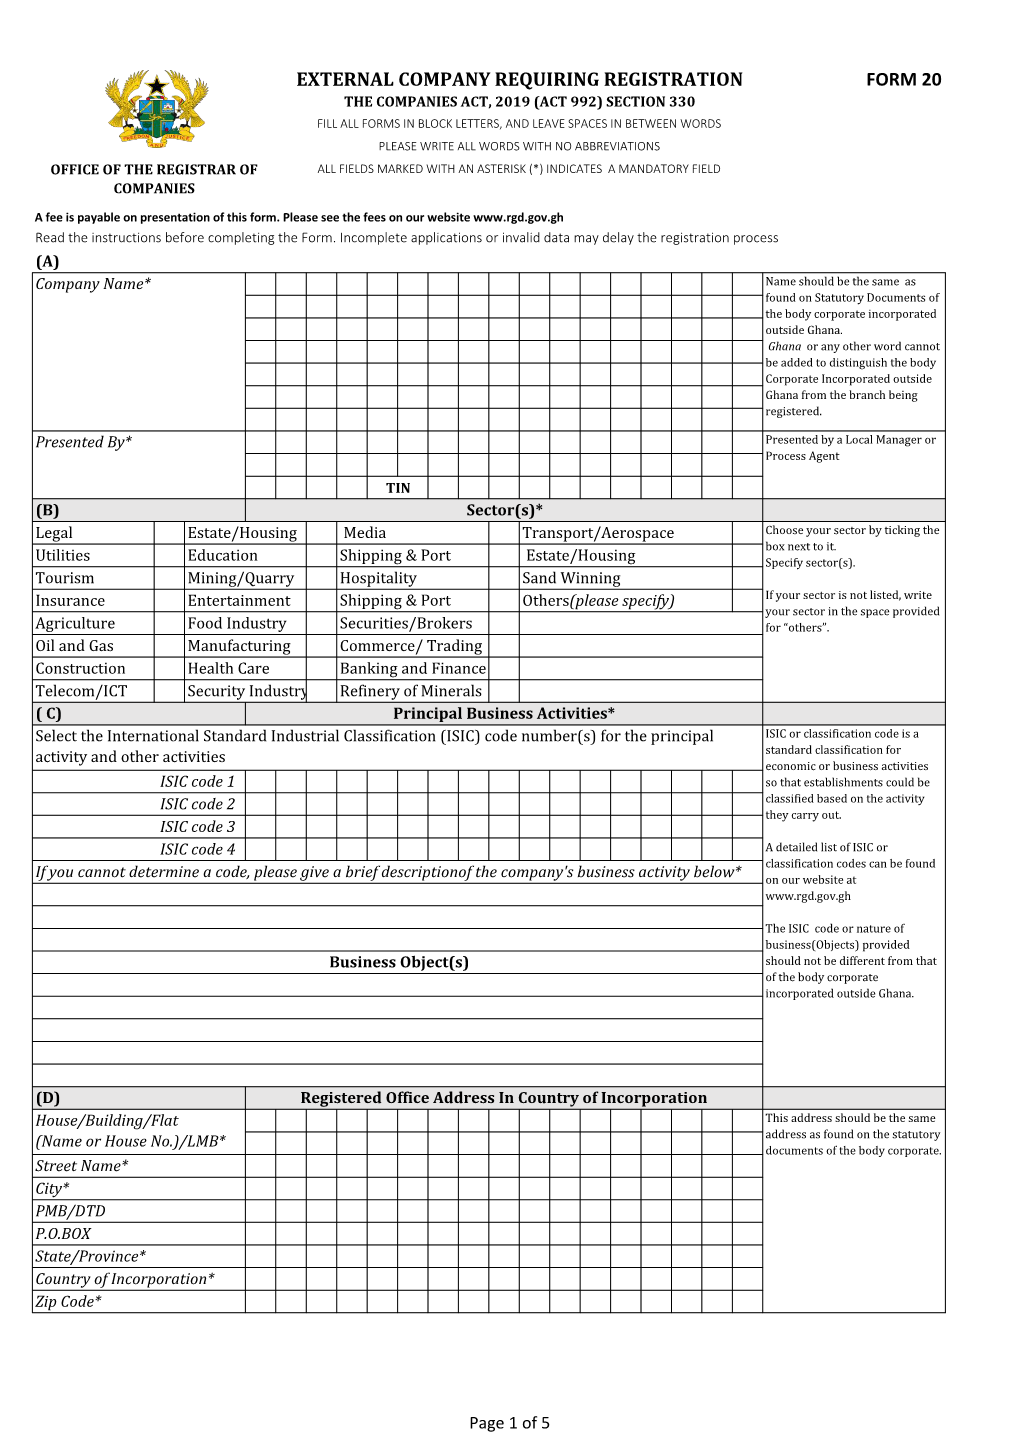 External Company Requiring Registration Form 20